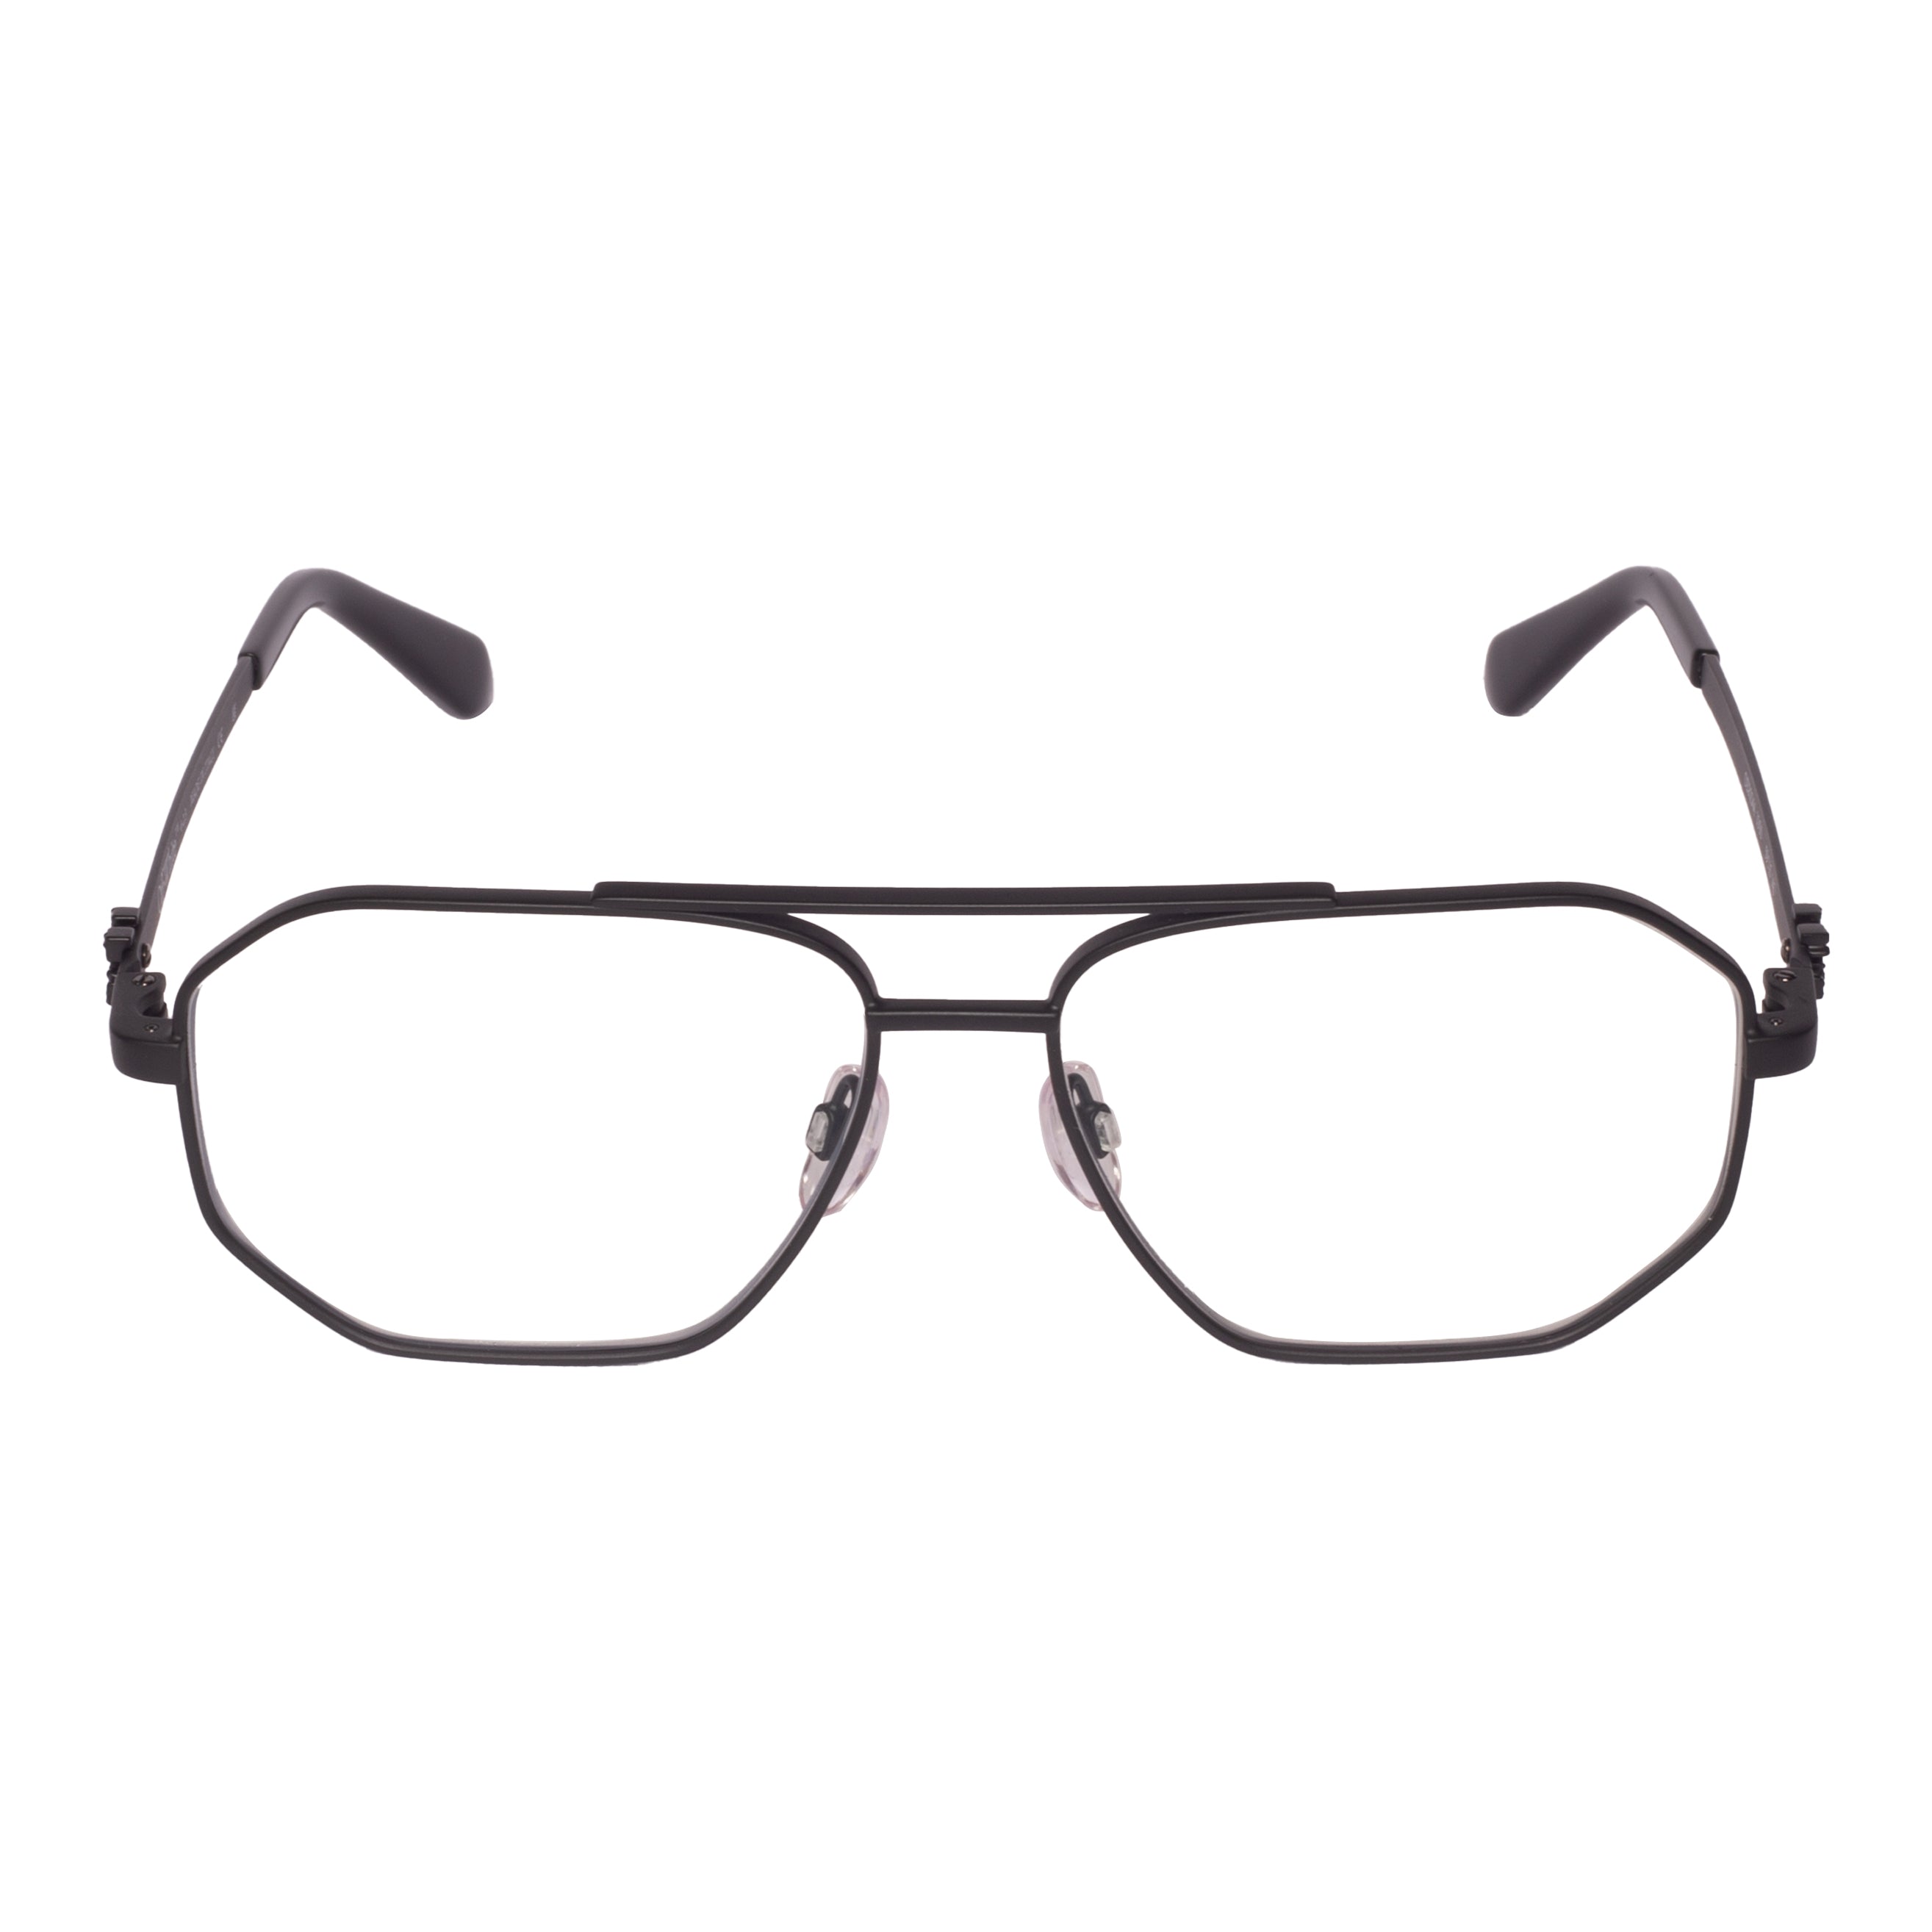 Off-White-OREJ 044-59-1000 Eyeglasses - Premium Eyeglasses from Off-White - Just Rs. 22900! Shop now at Laxmi Opticians